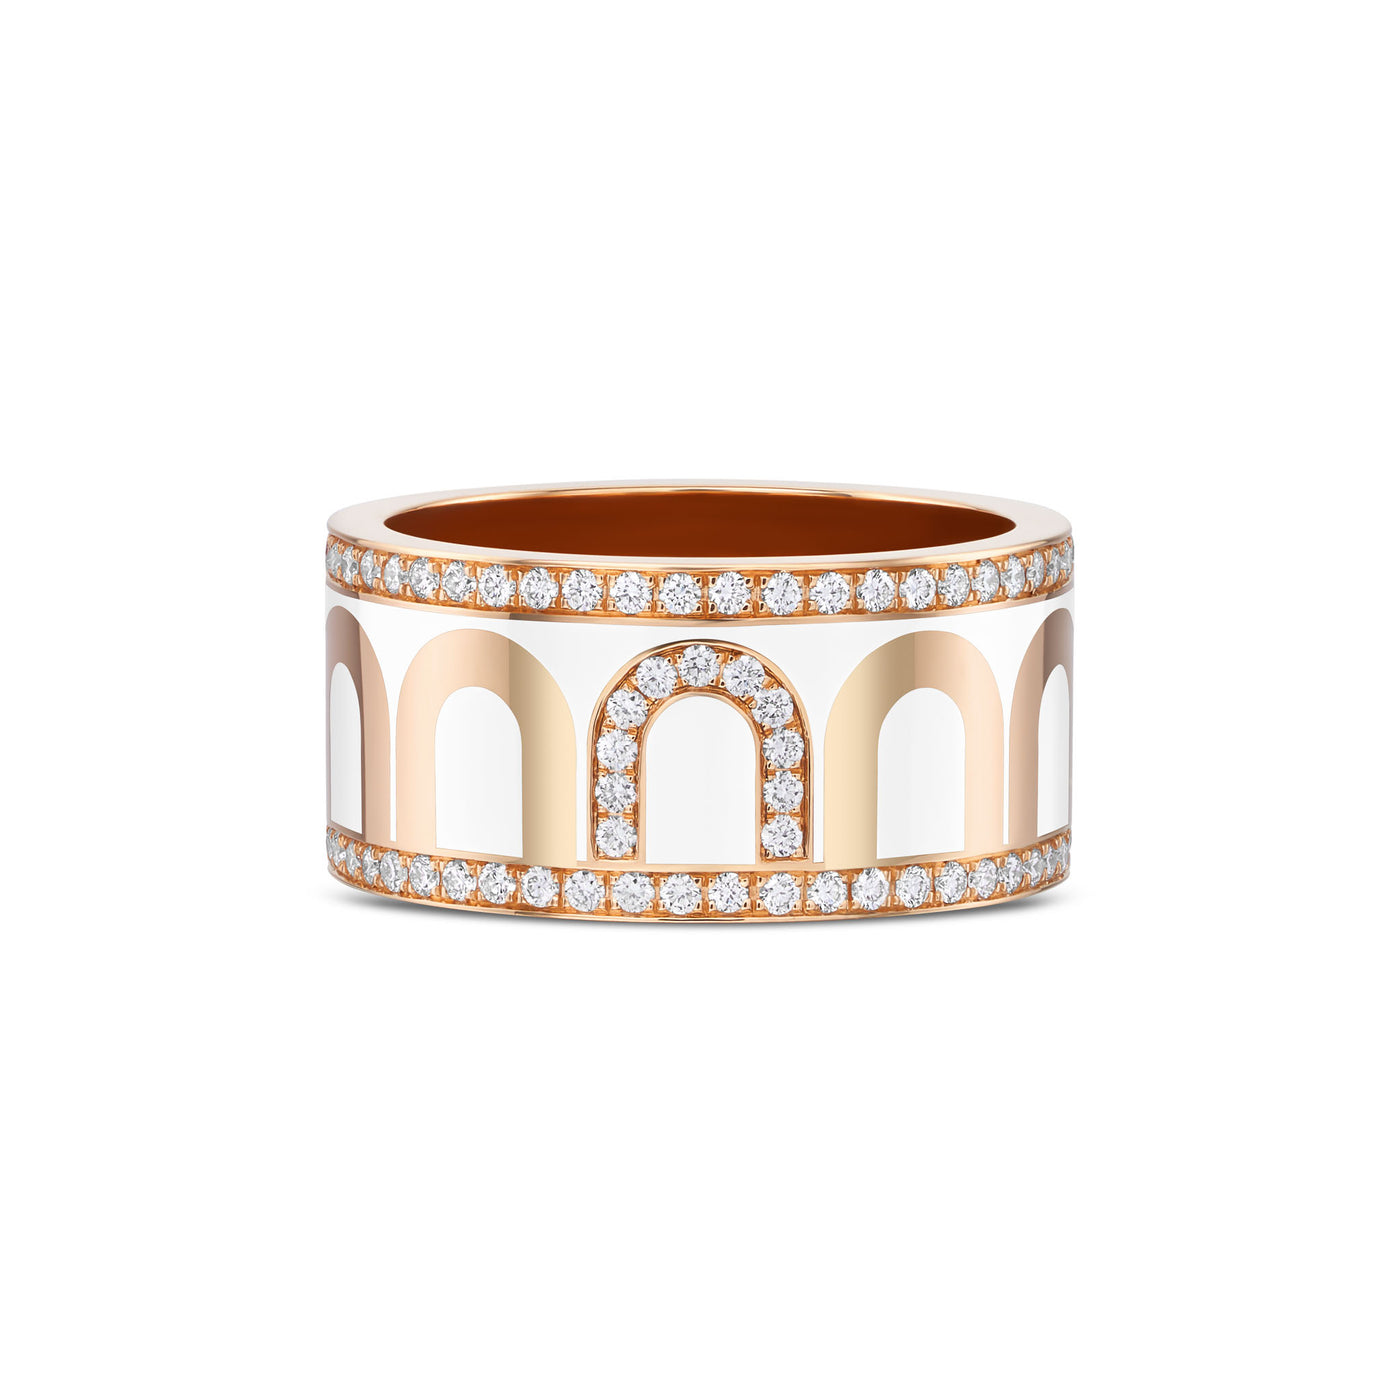 L'Arc de DAVIDOR Ring GM Porta Diamonds, 18k Rose Gold with Neige Lacquered Ceramic - DAVIDOR